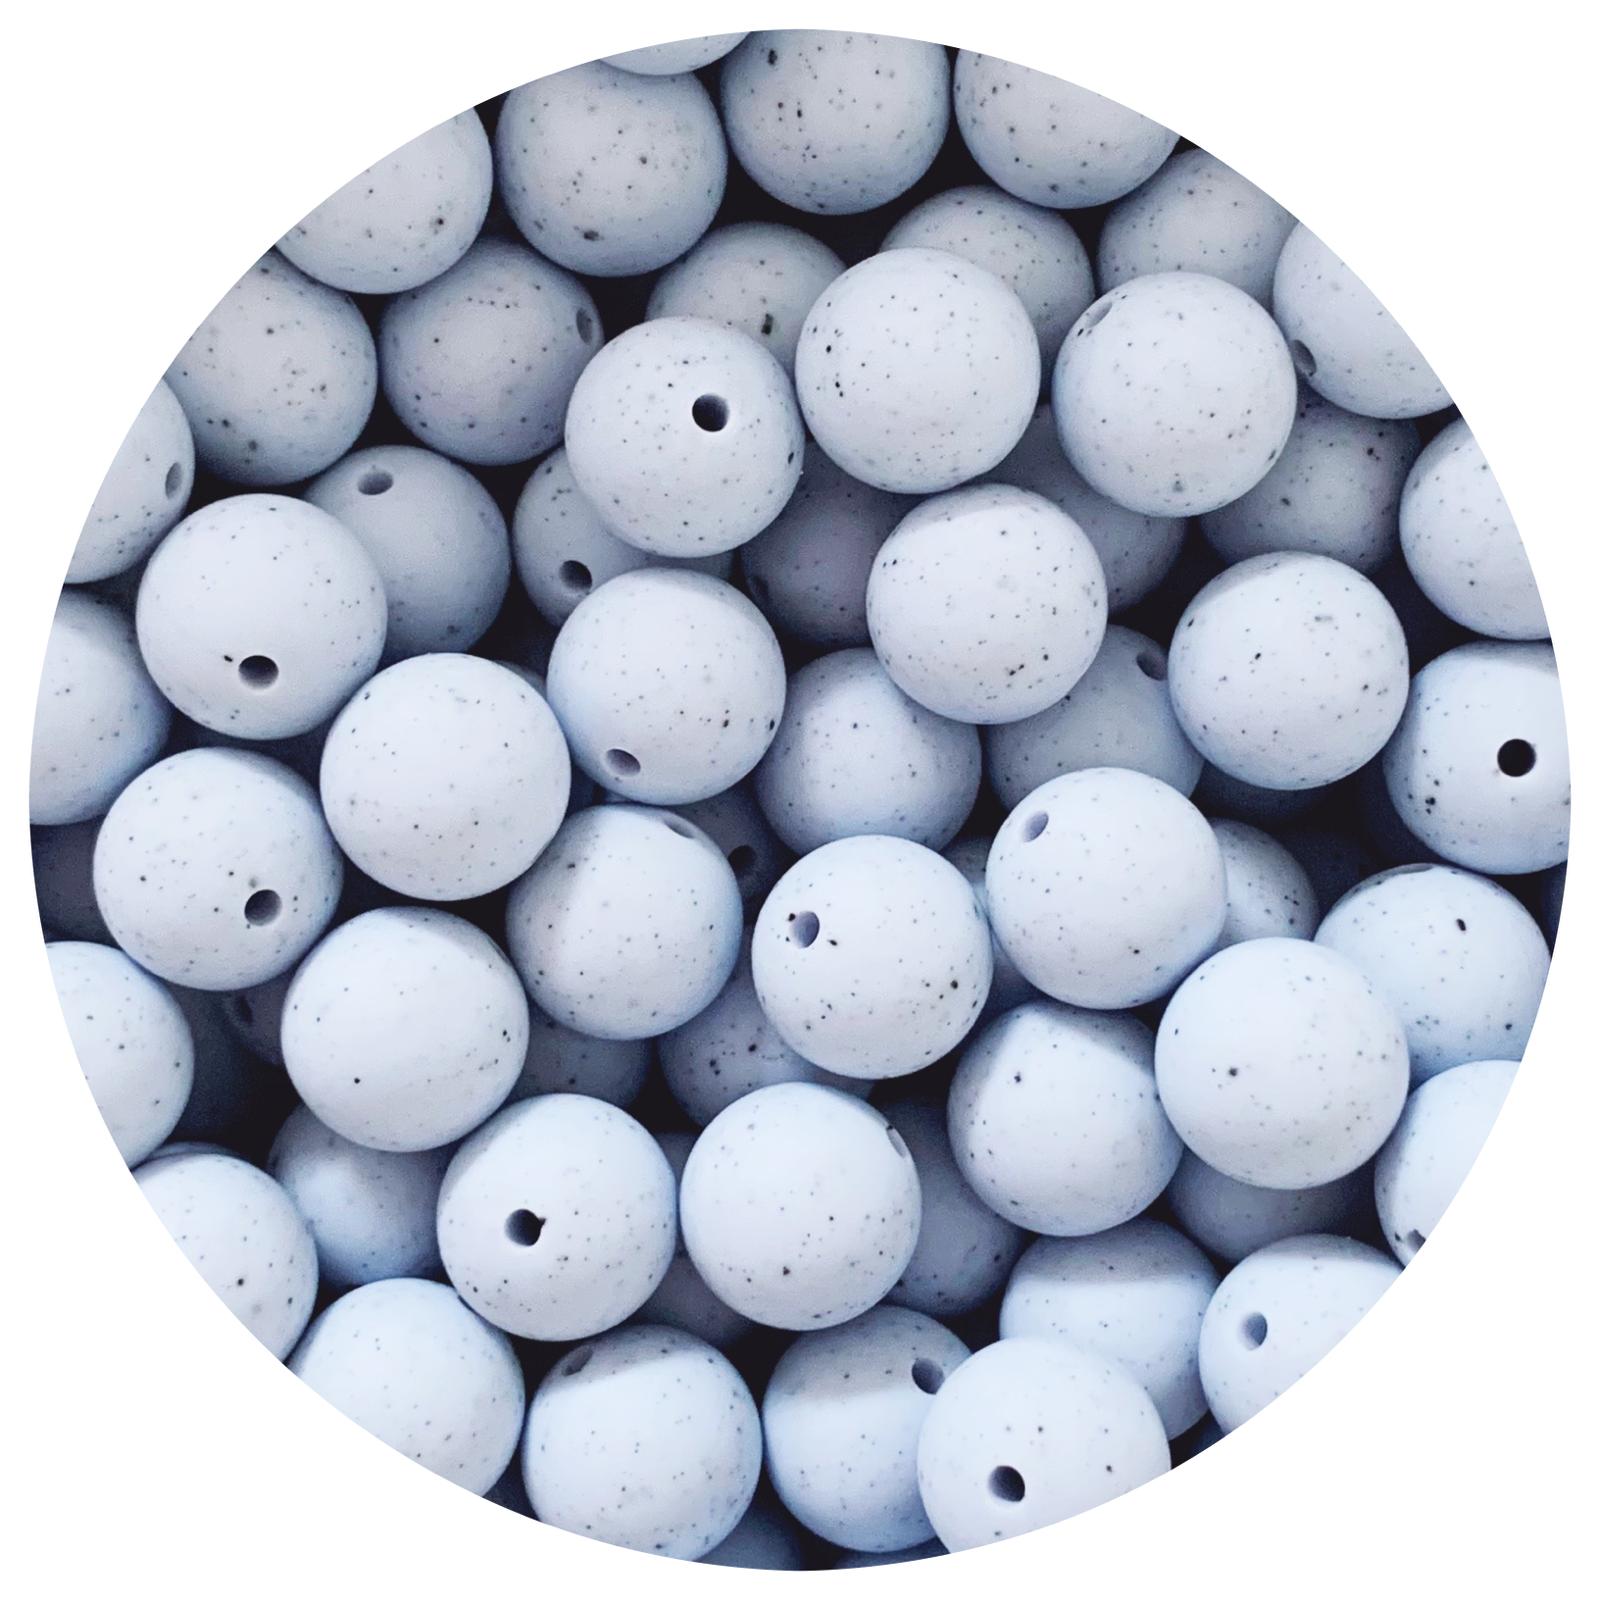 Pastel Blue Speckled - 15mm round - 10 Beads